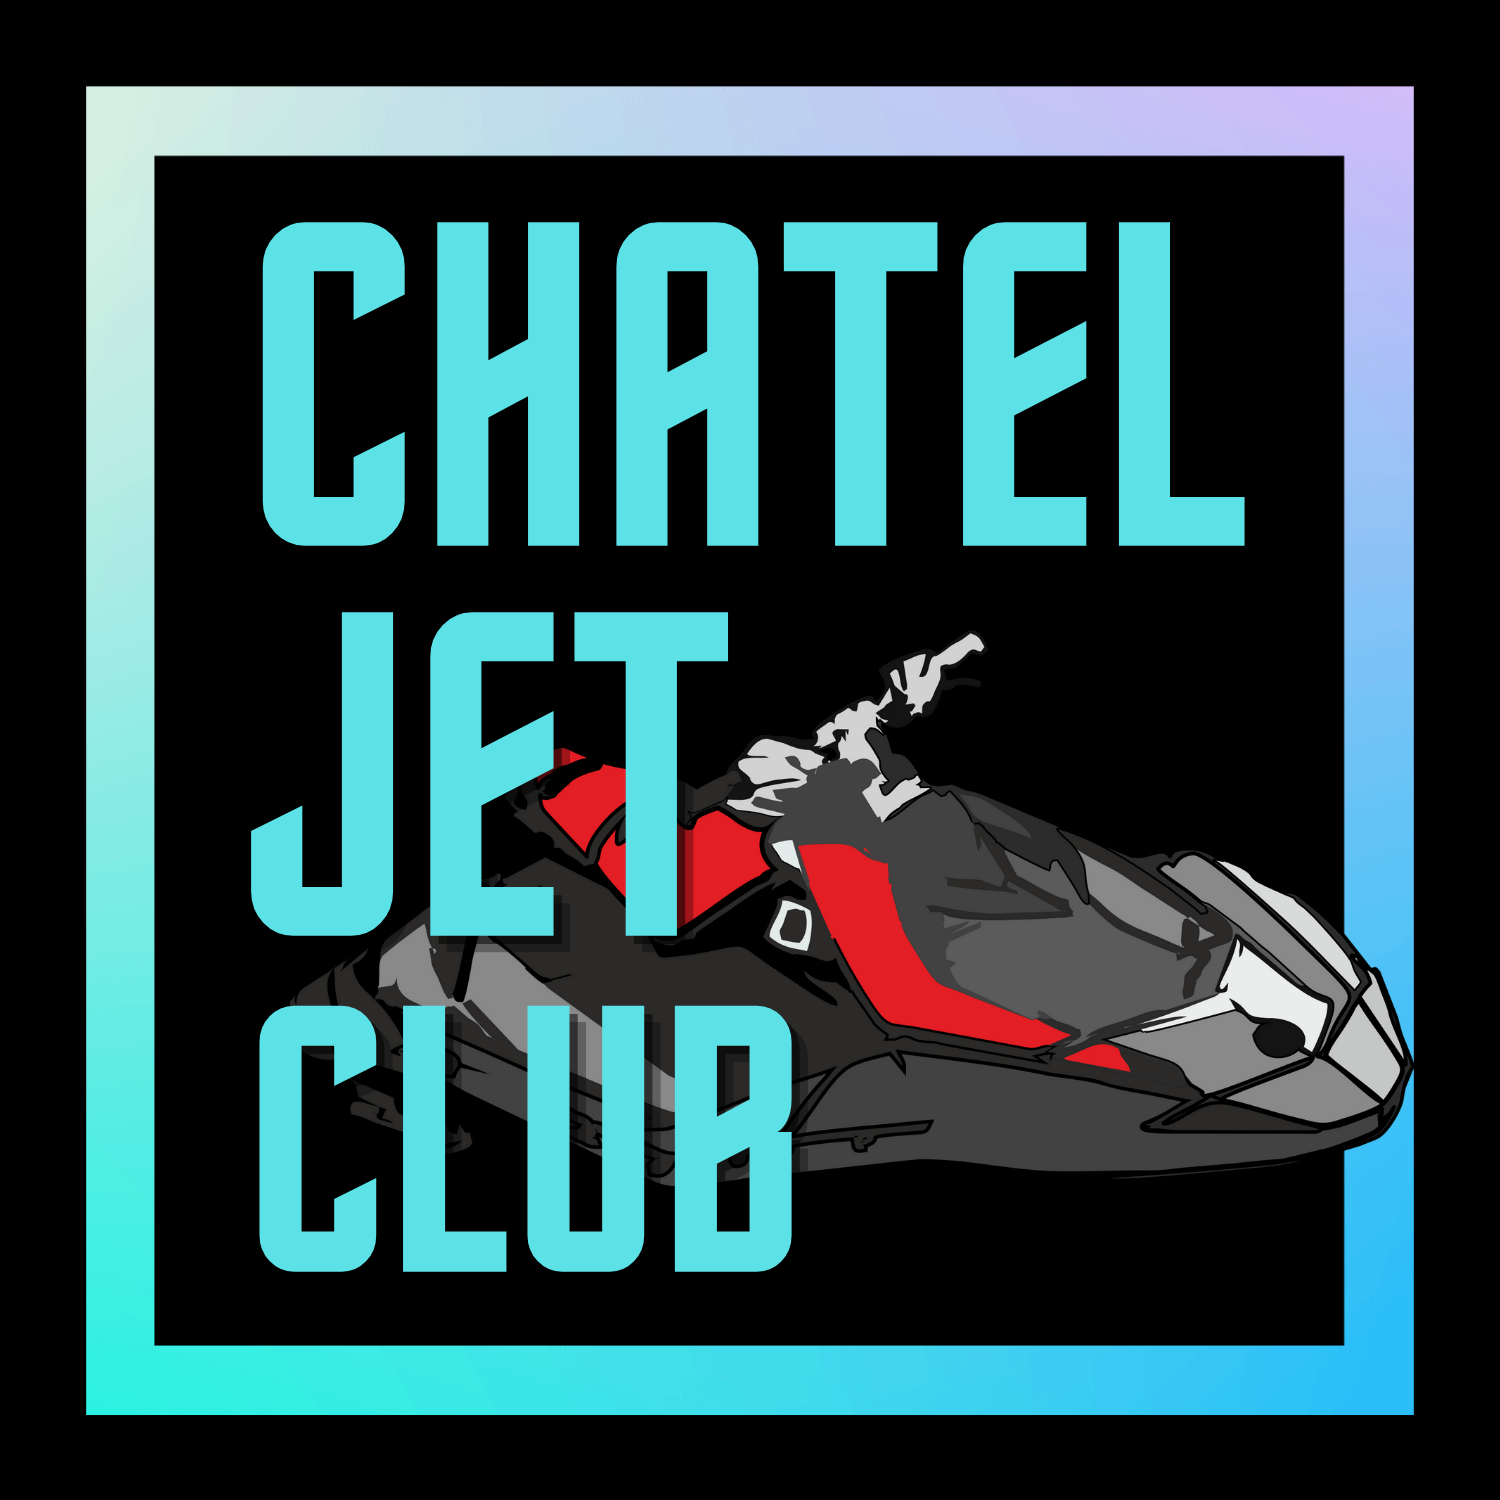 Chatel Jet Club